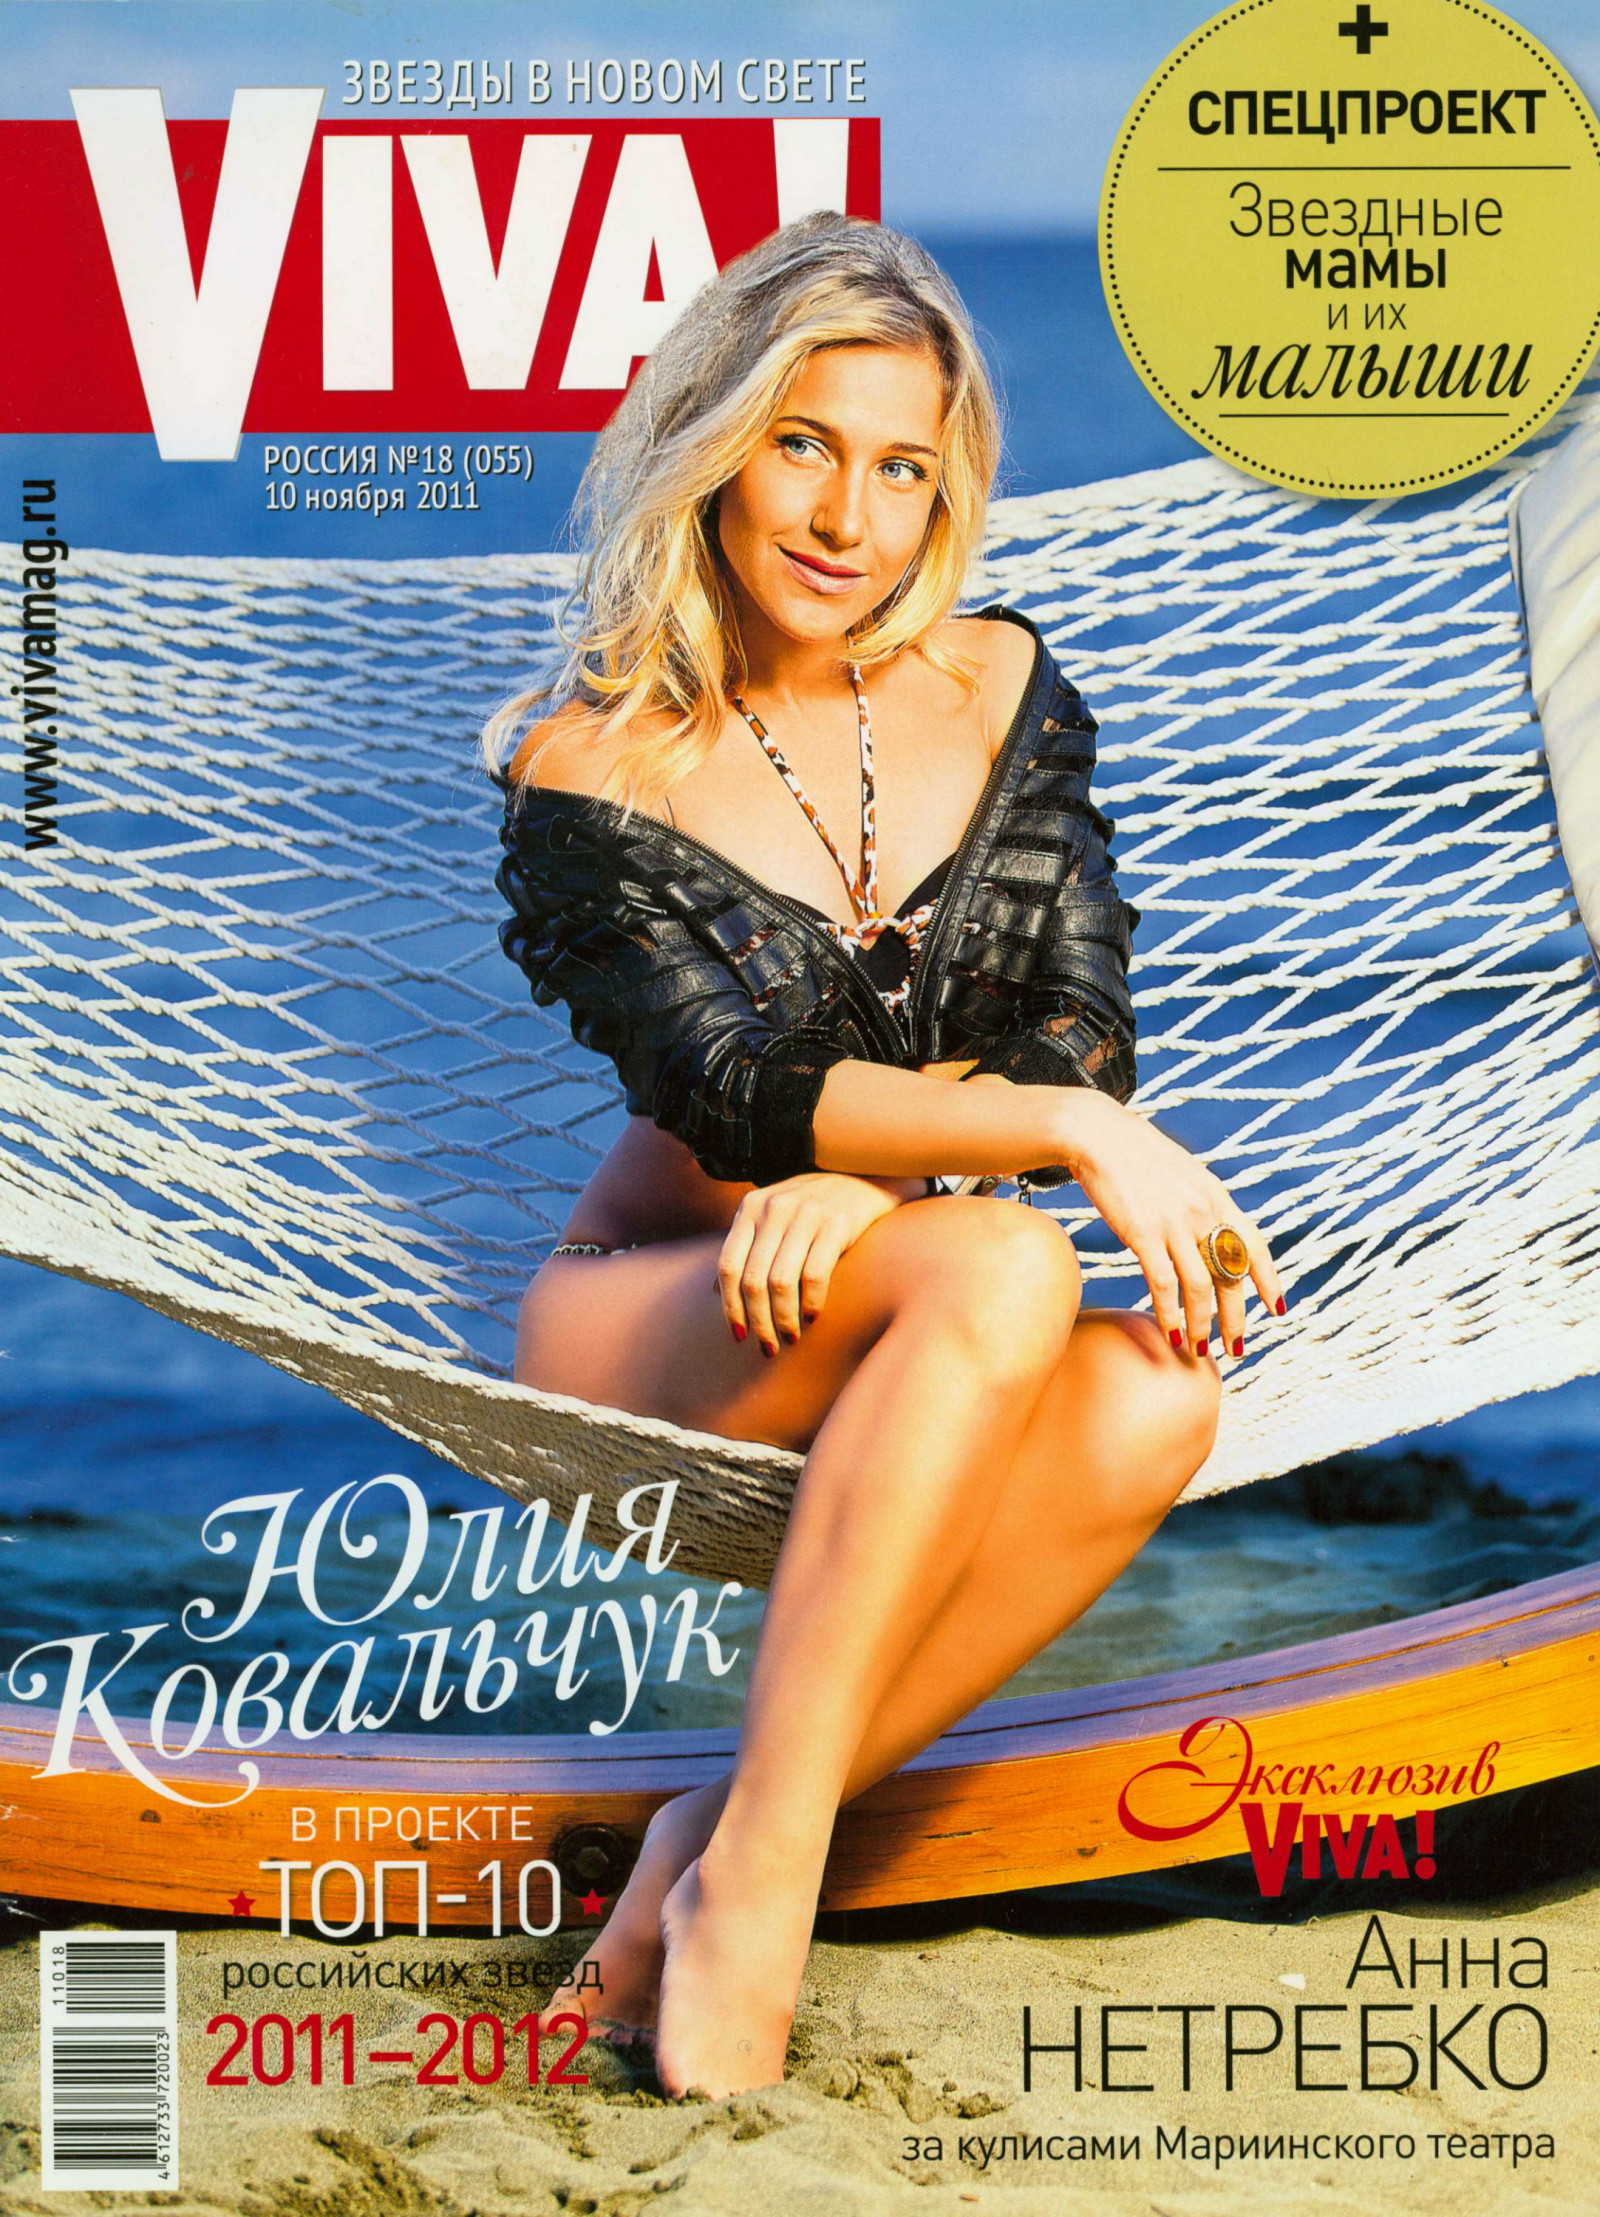 Юлия Ковальчук (Yulia Kovalchuk)